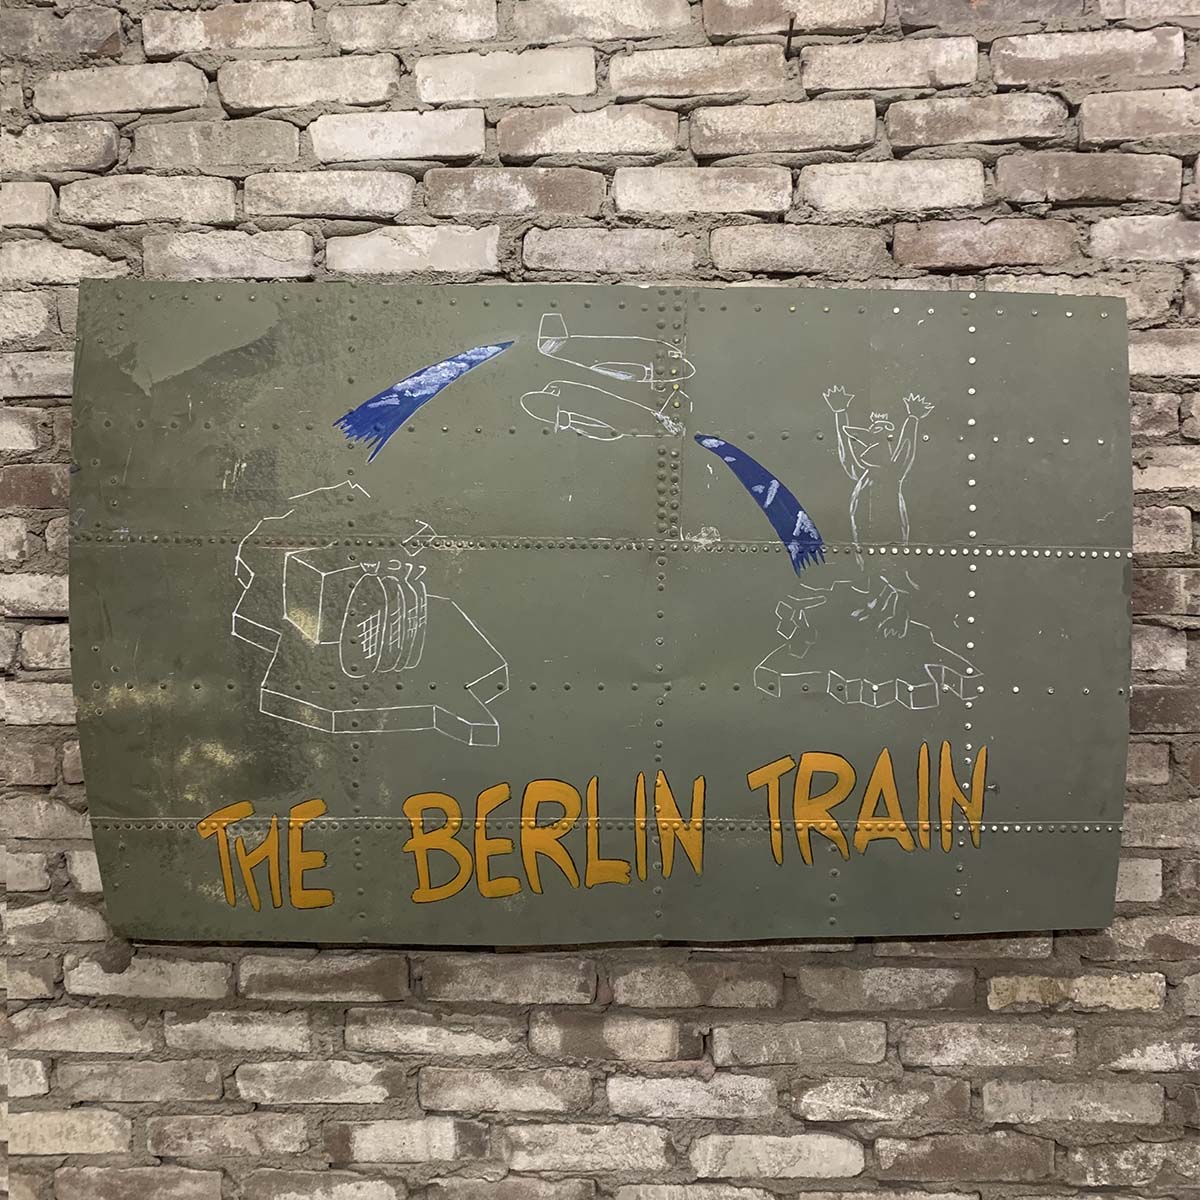 Original C-47 Dakota skin panel painted with The Berlin Train nose art for sale.